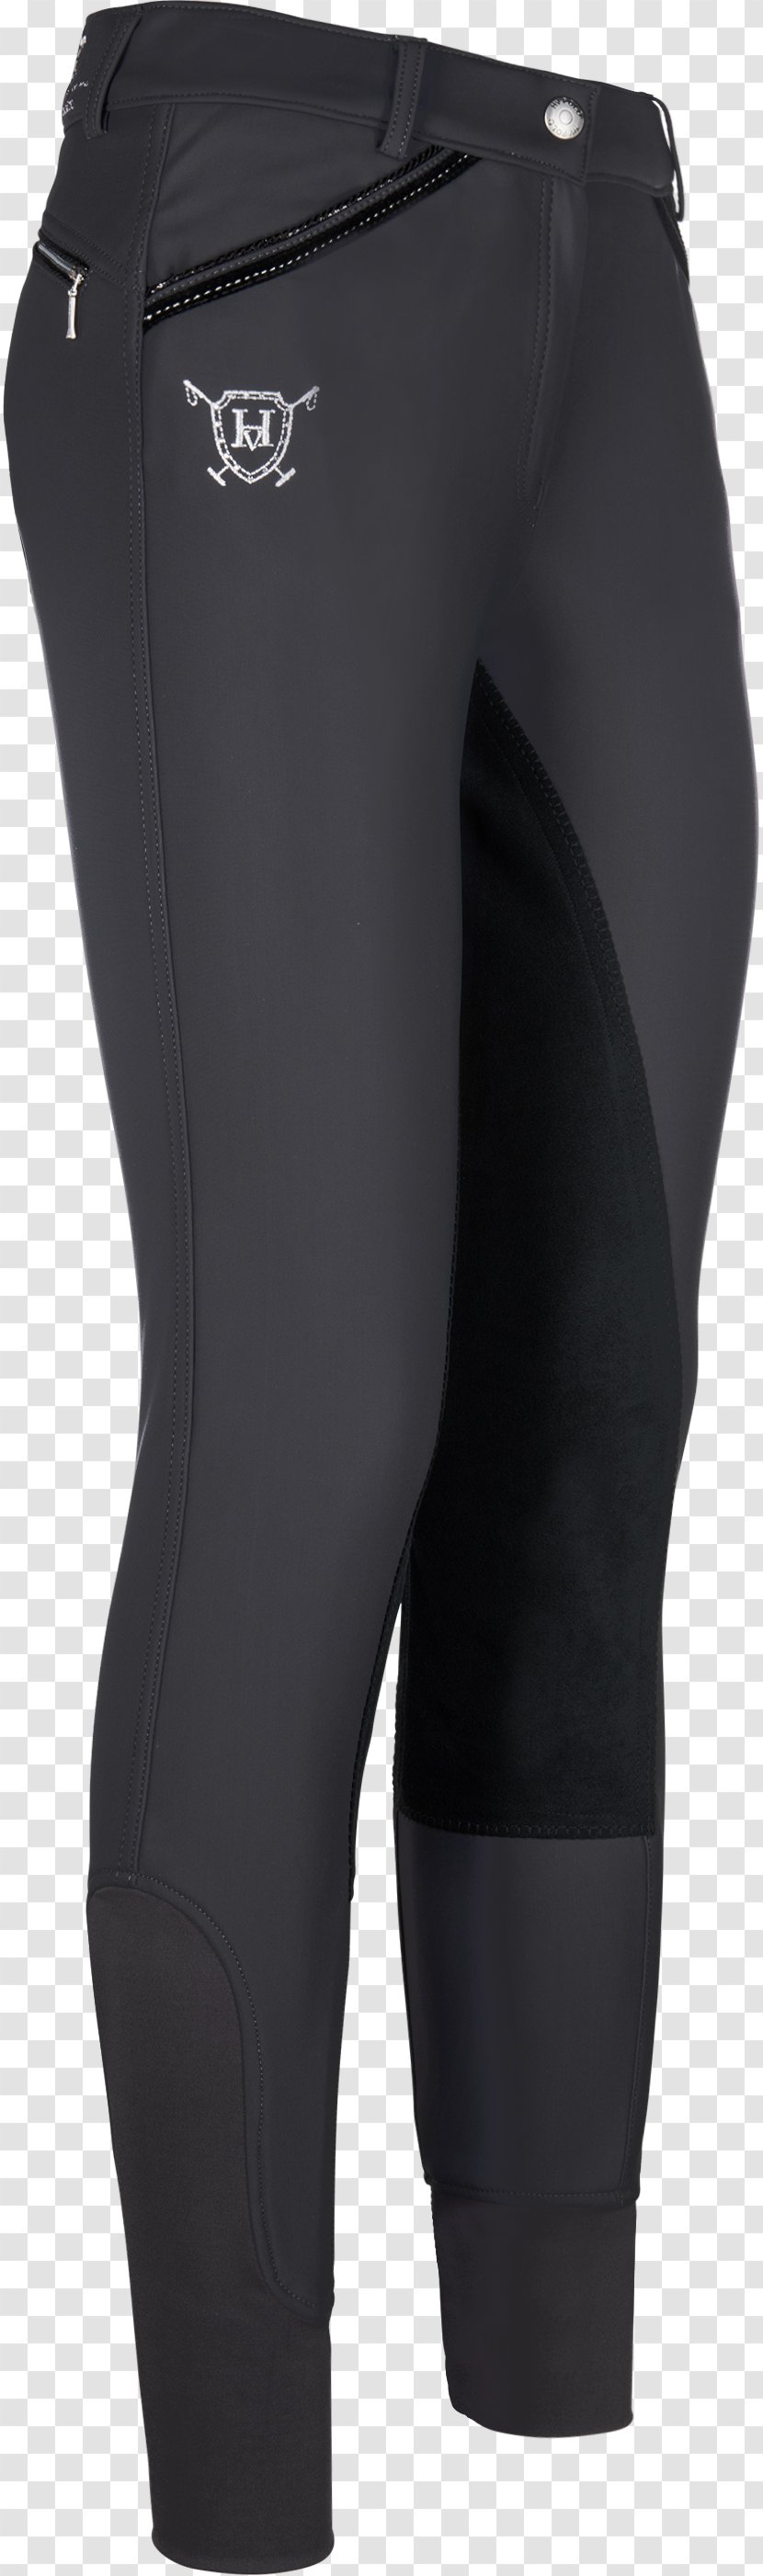 Tracksuit Pants Leggings Clothing Adidas - Black Transparent PNG